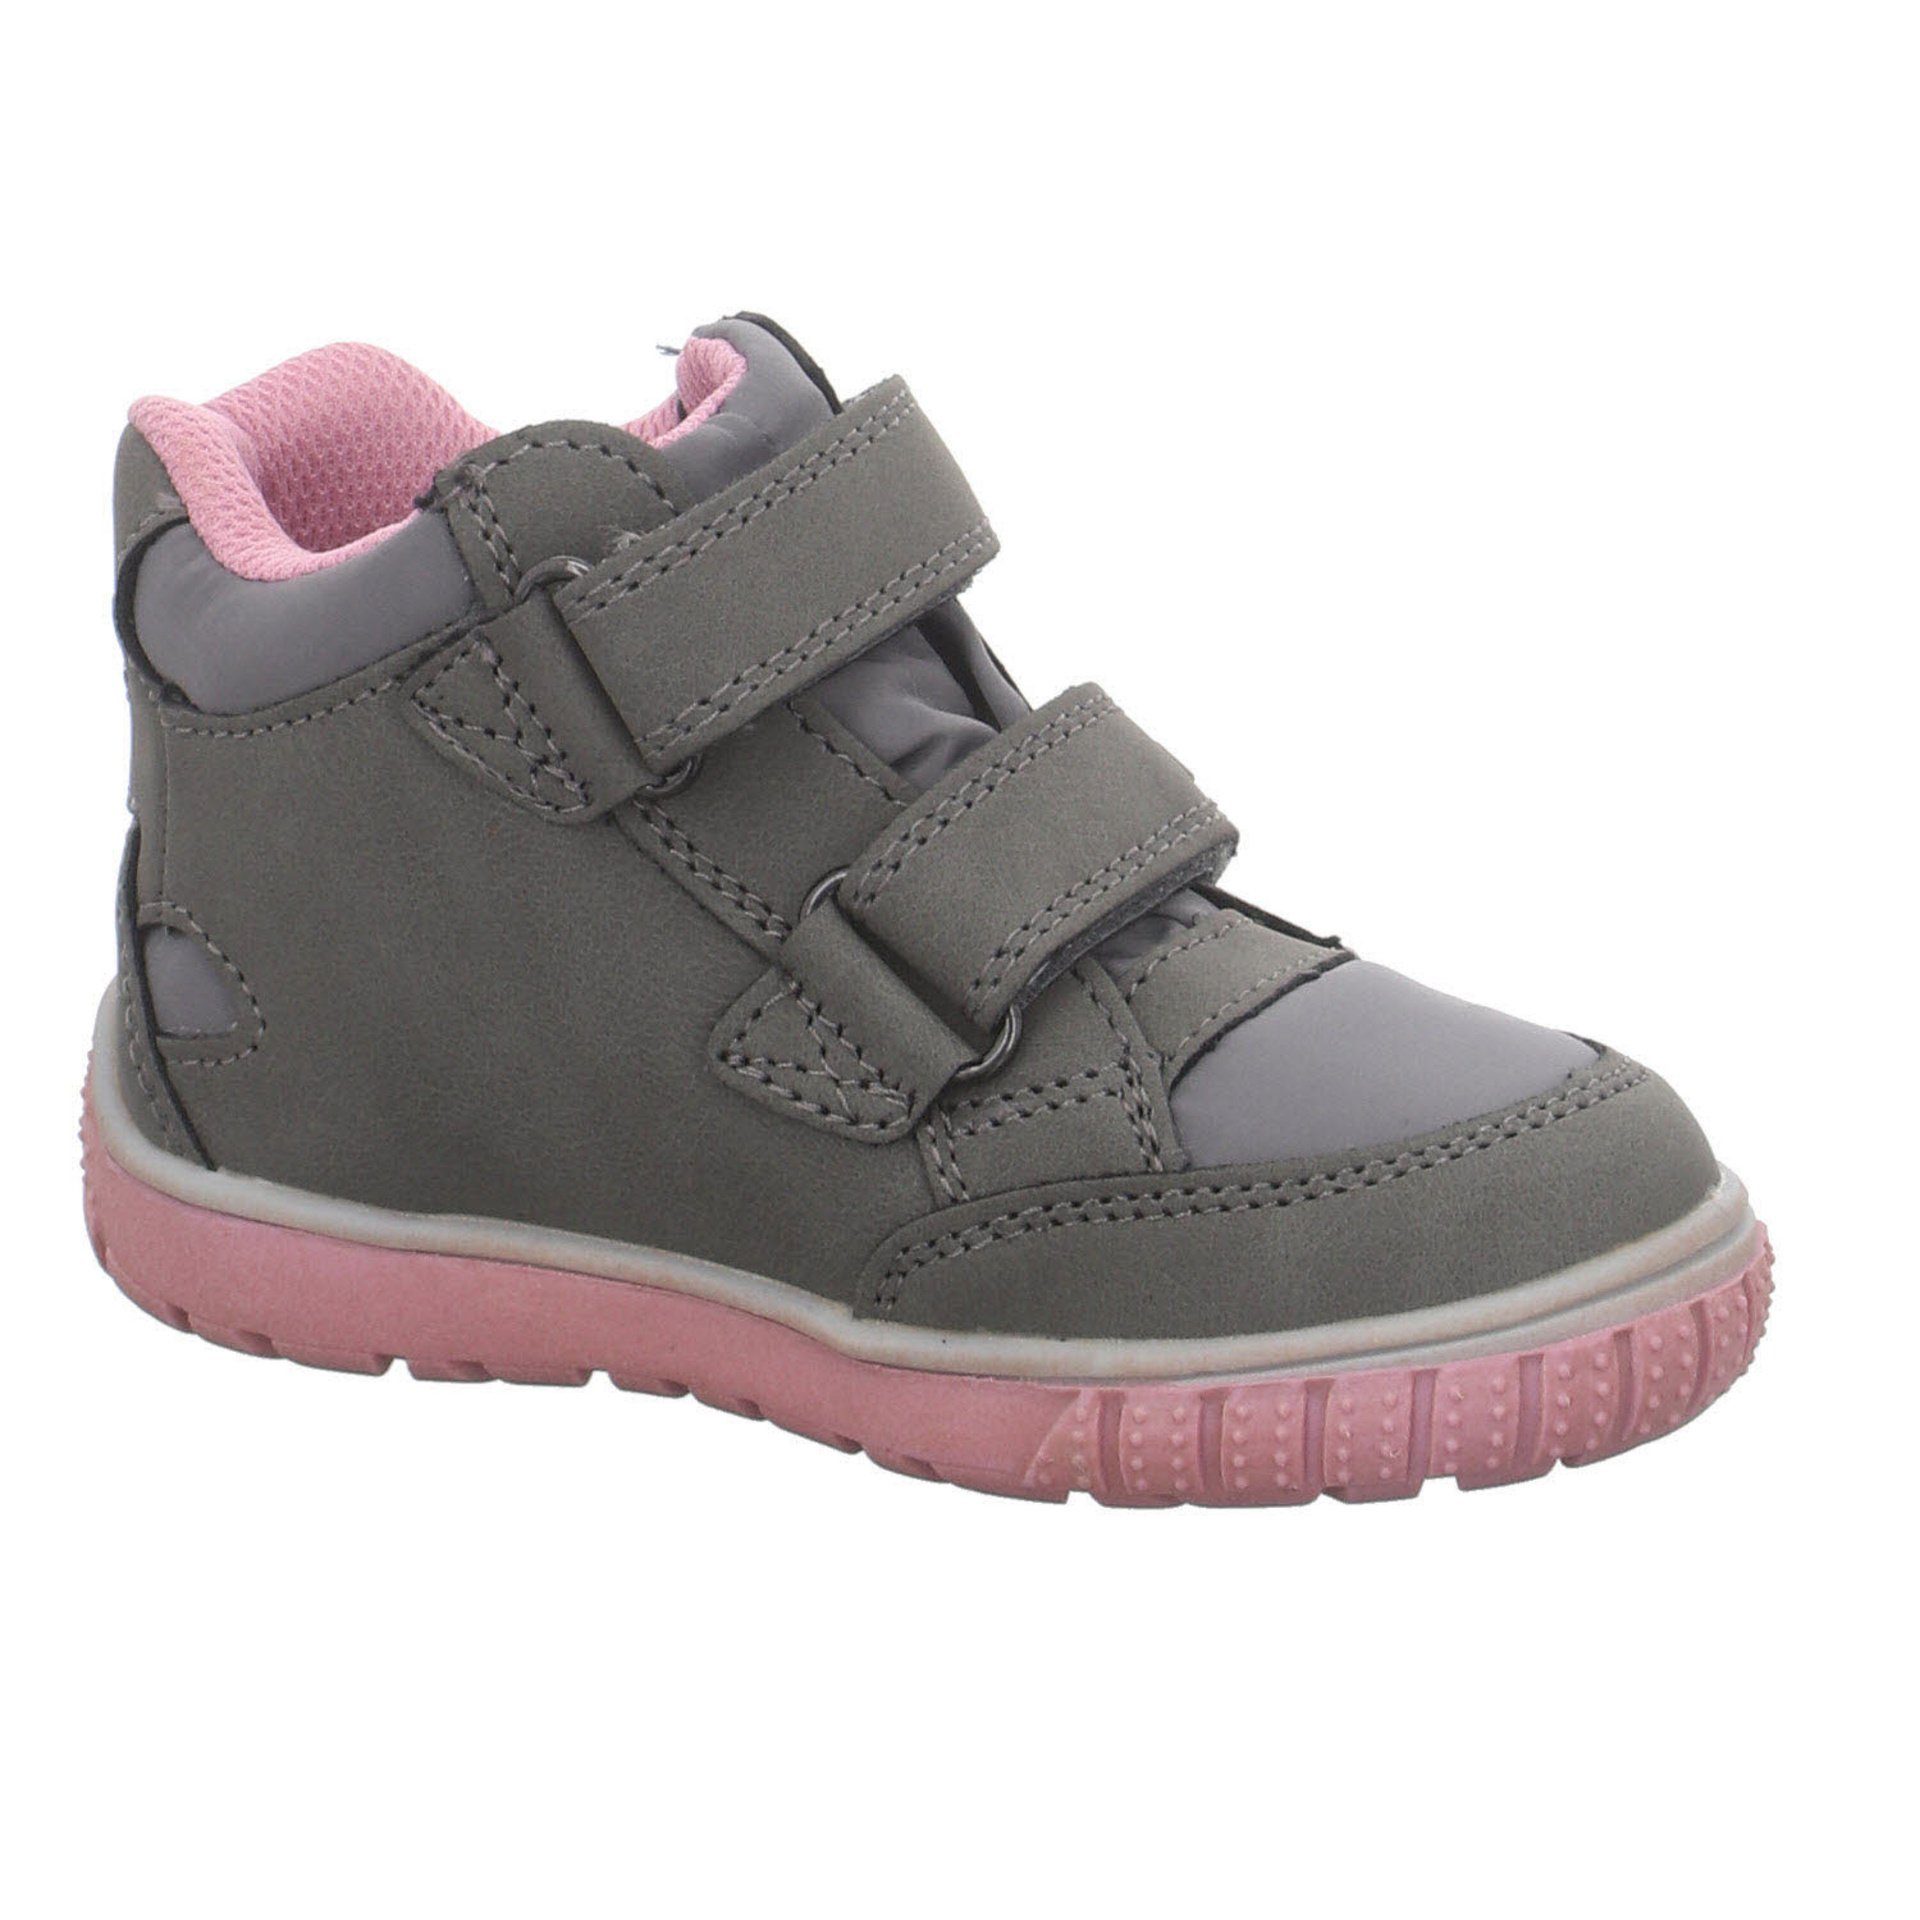 Lurchi Krabbelschuhe Baby Synthetikkombination Boots Stiefelette grey Lauflernschuhe rose Jotti-Tex